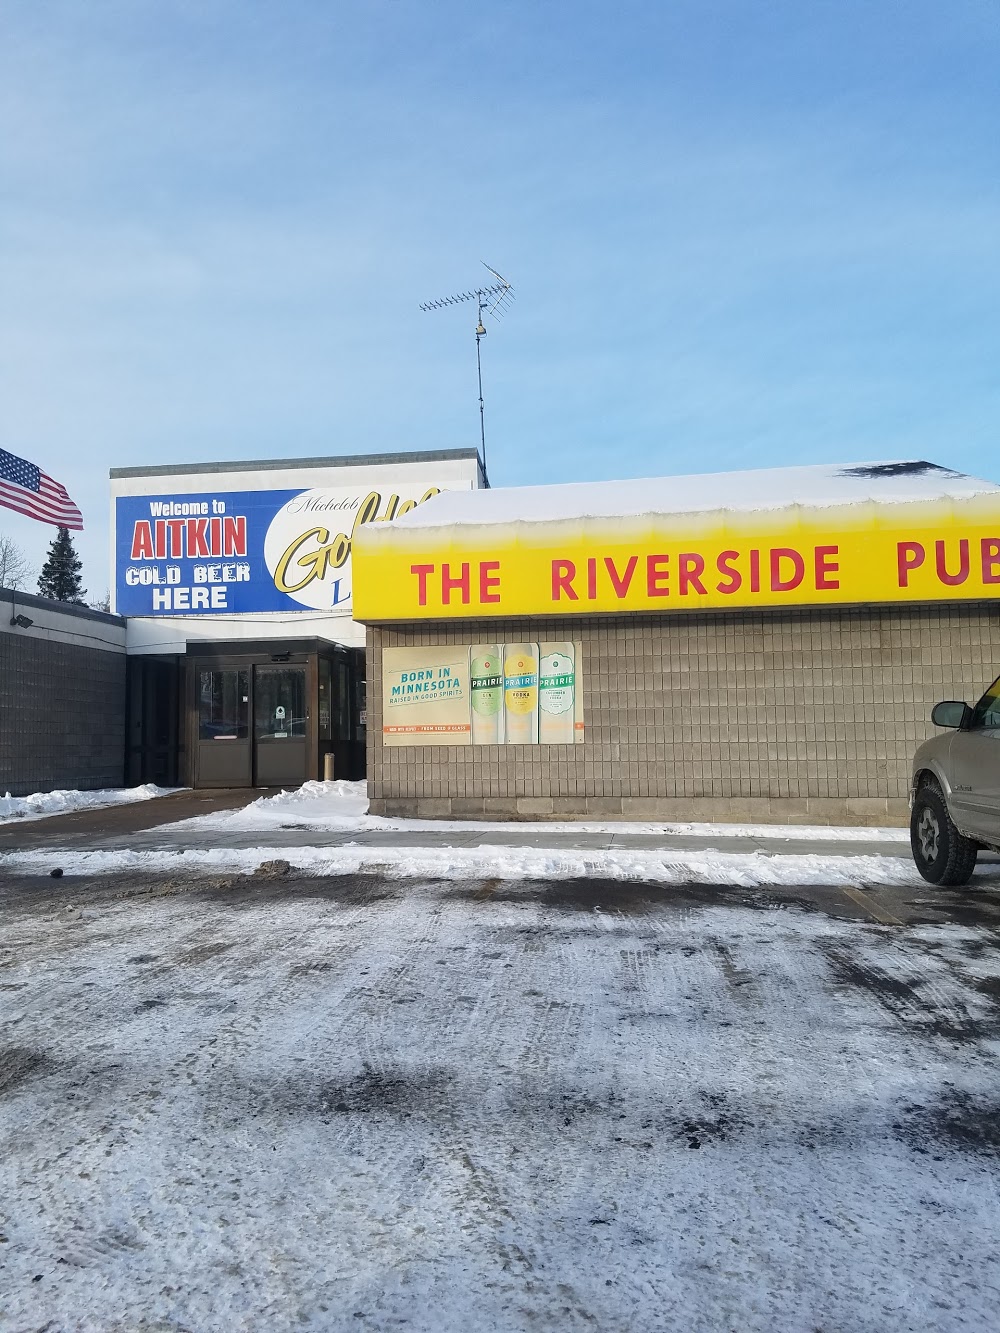 Riverside Pub